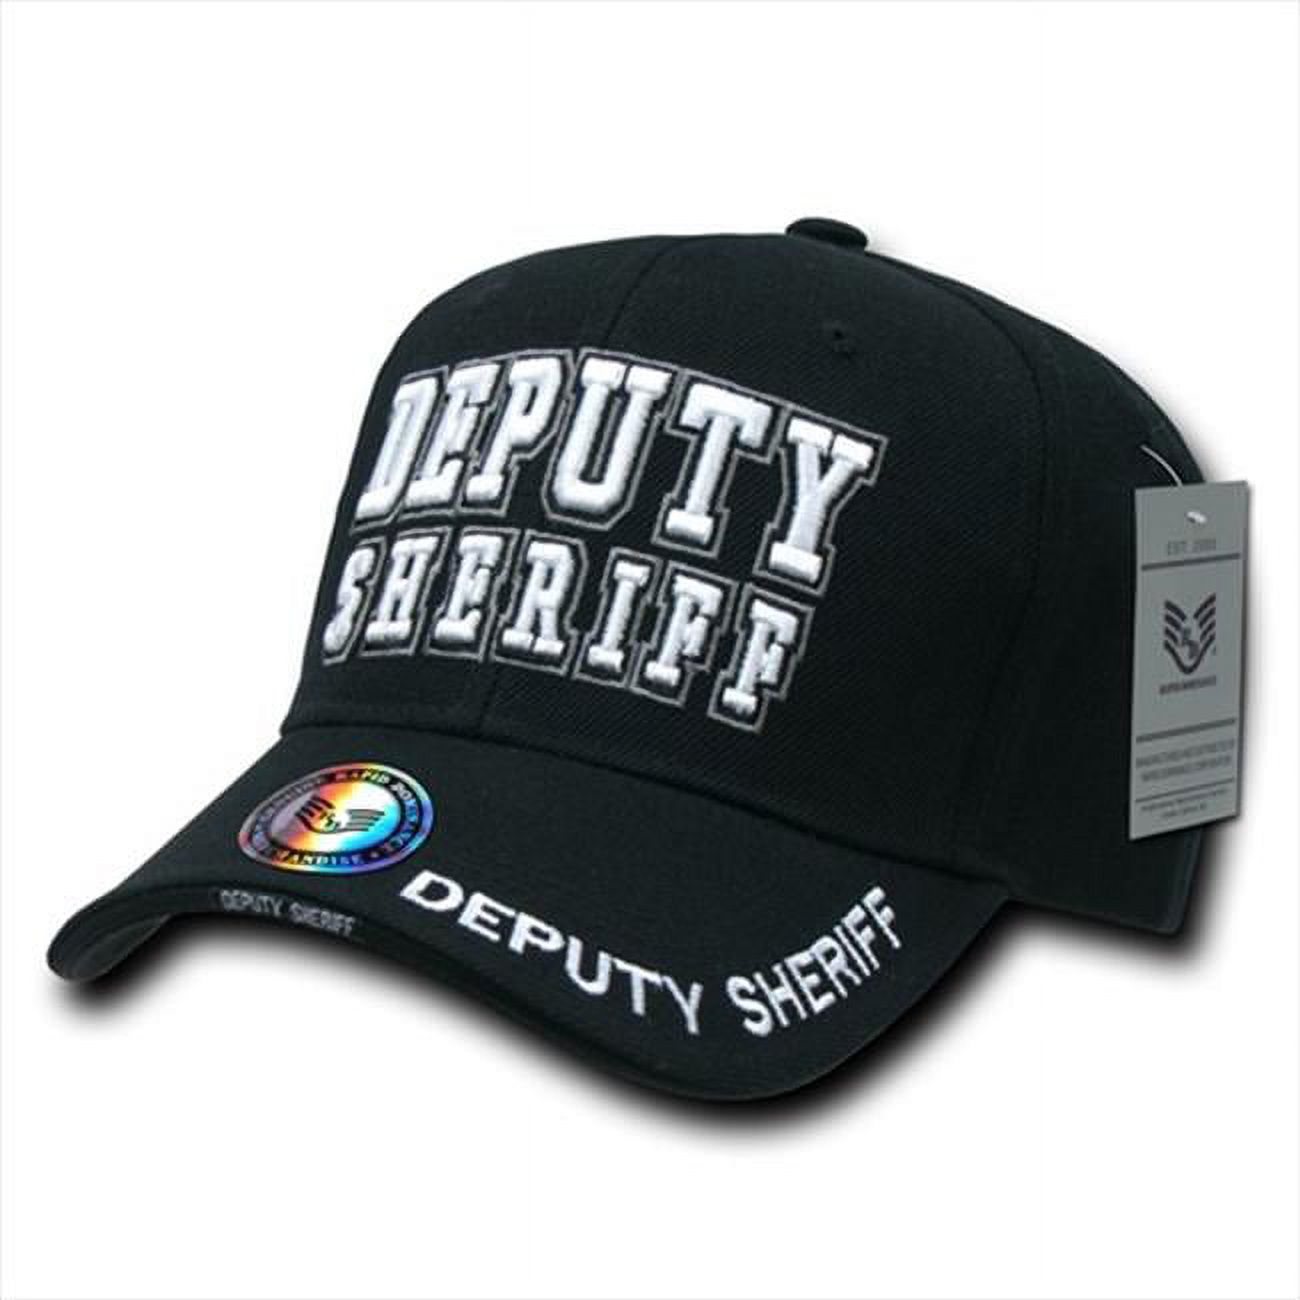 Rapid Dominance Deputy Sheriff Deluxe Law Enf. Mens Cap [Black - Adjustable] - image 1 of 2